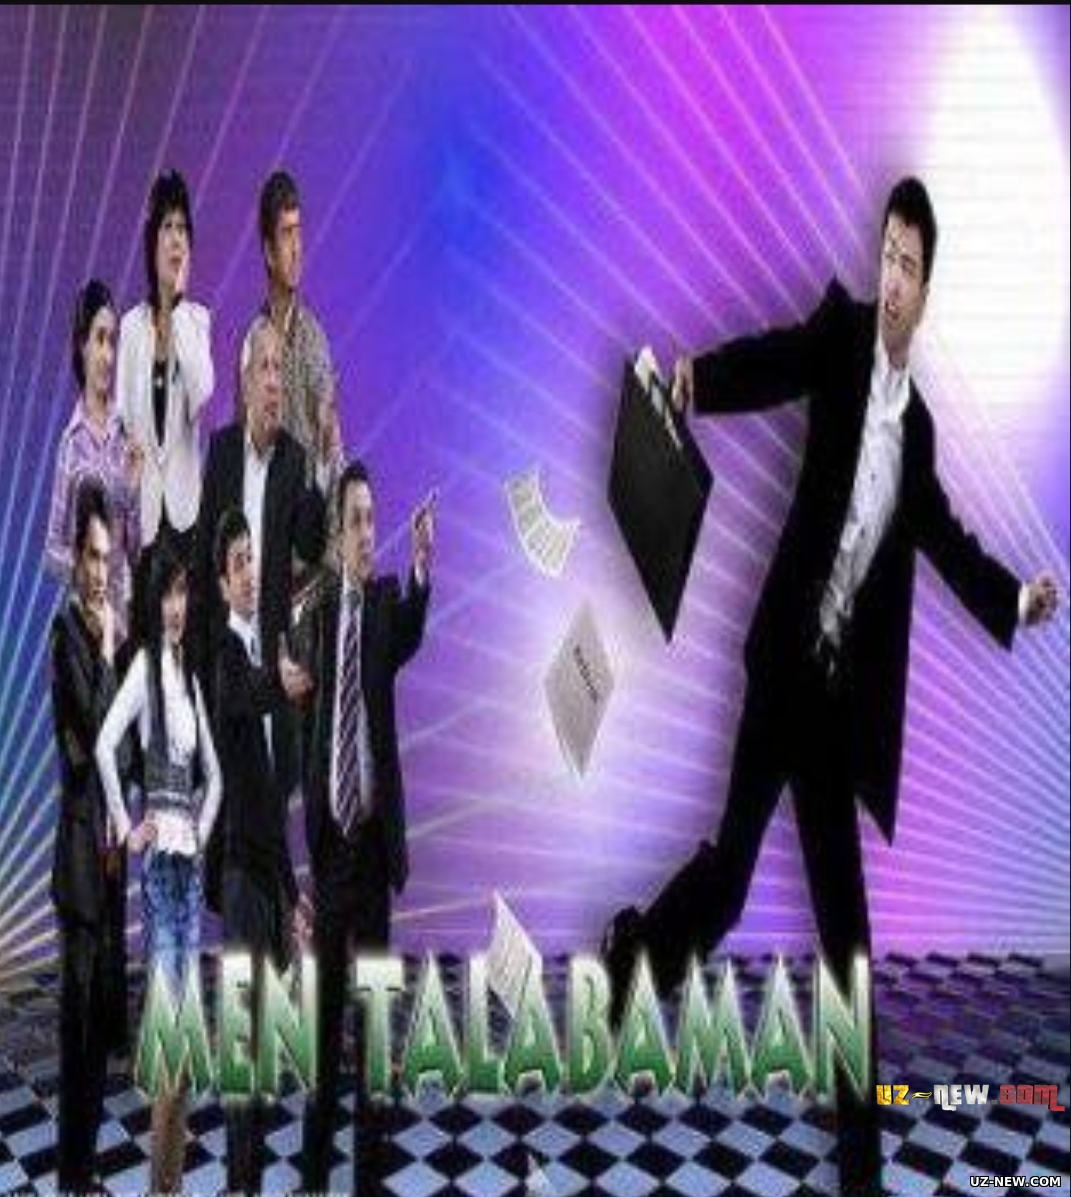 Men talabaman (o'zbek film) | Мен талабаман (узбекфильм)